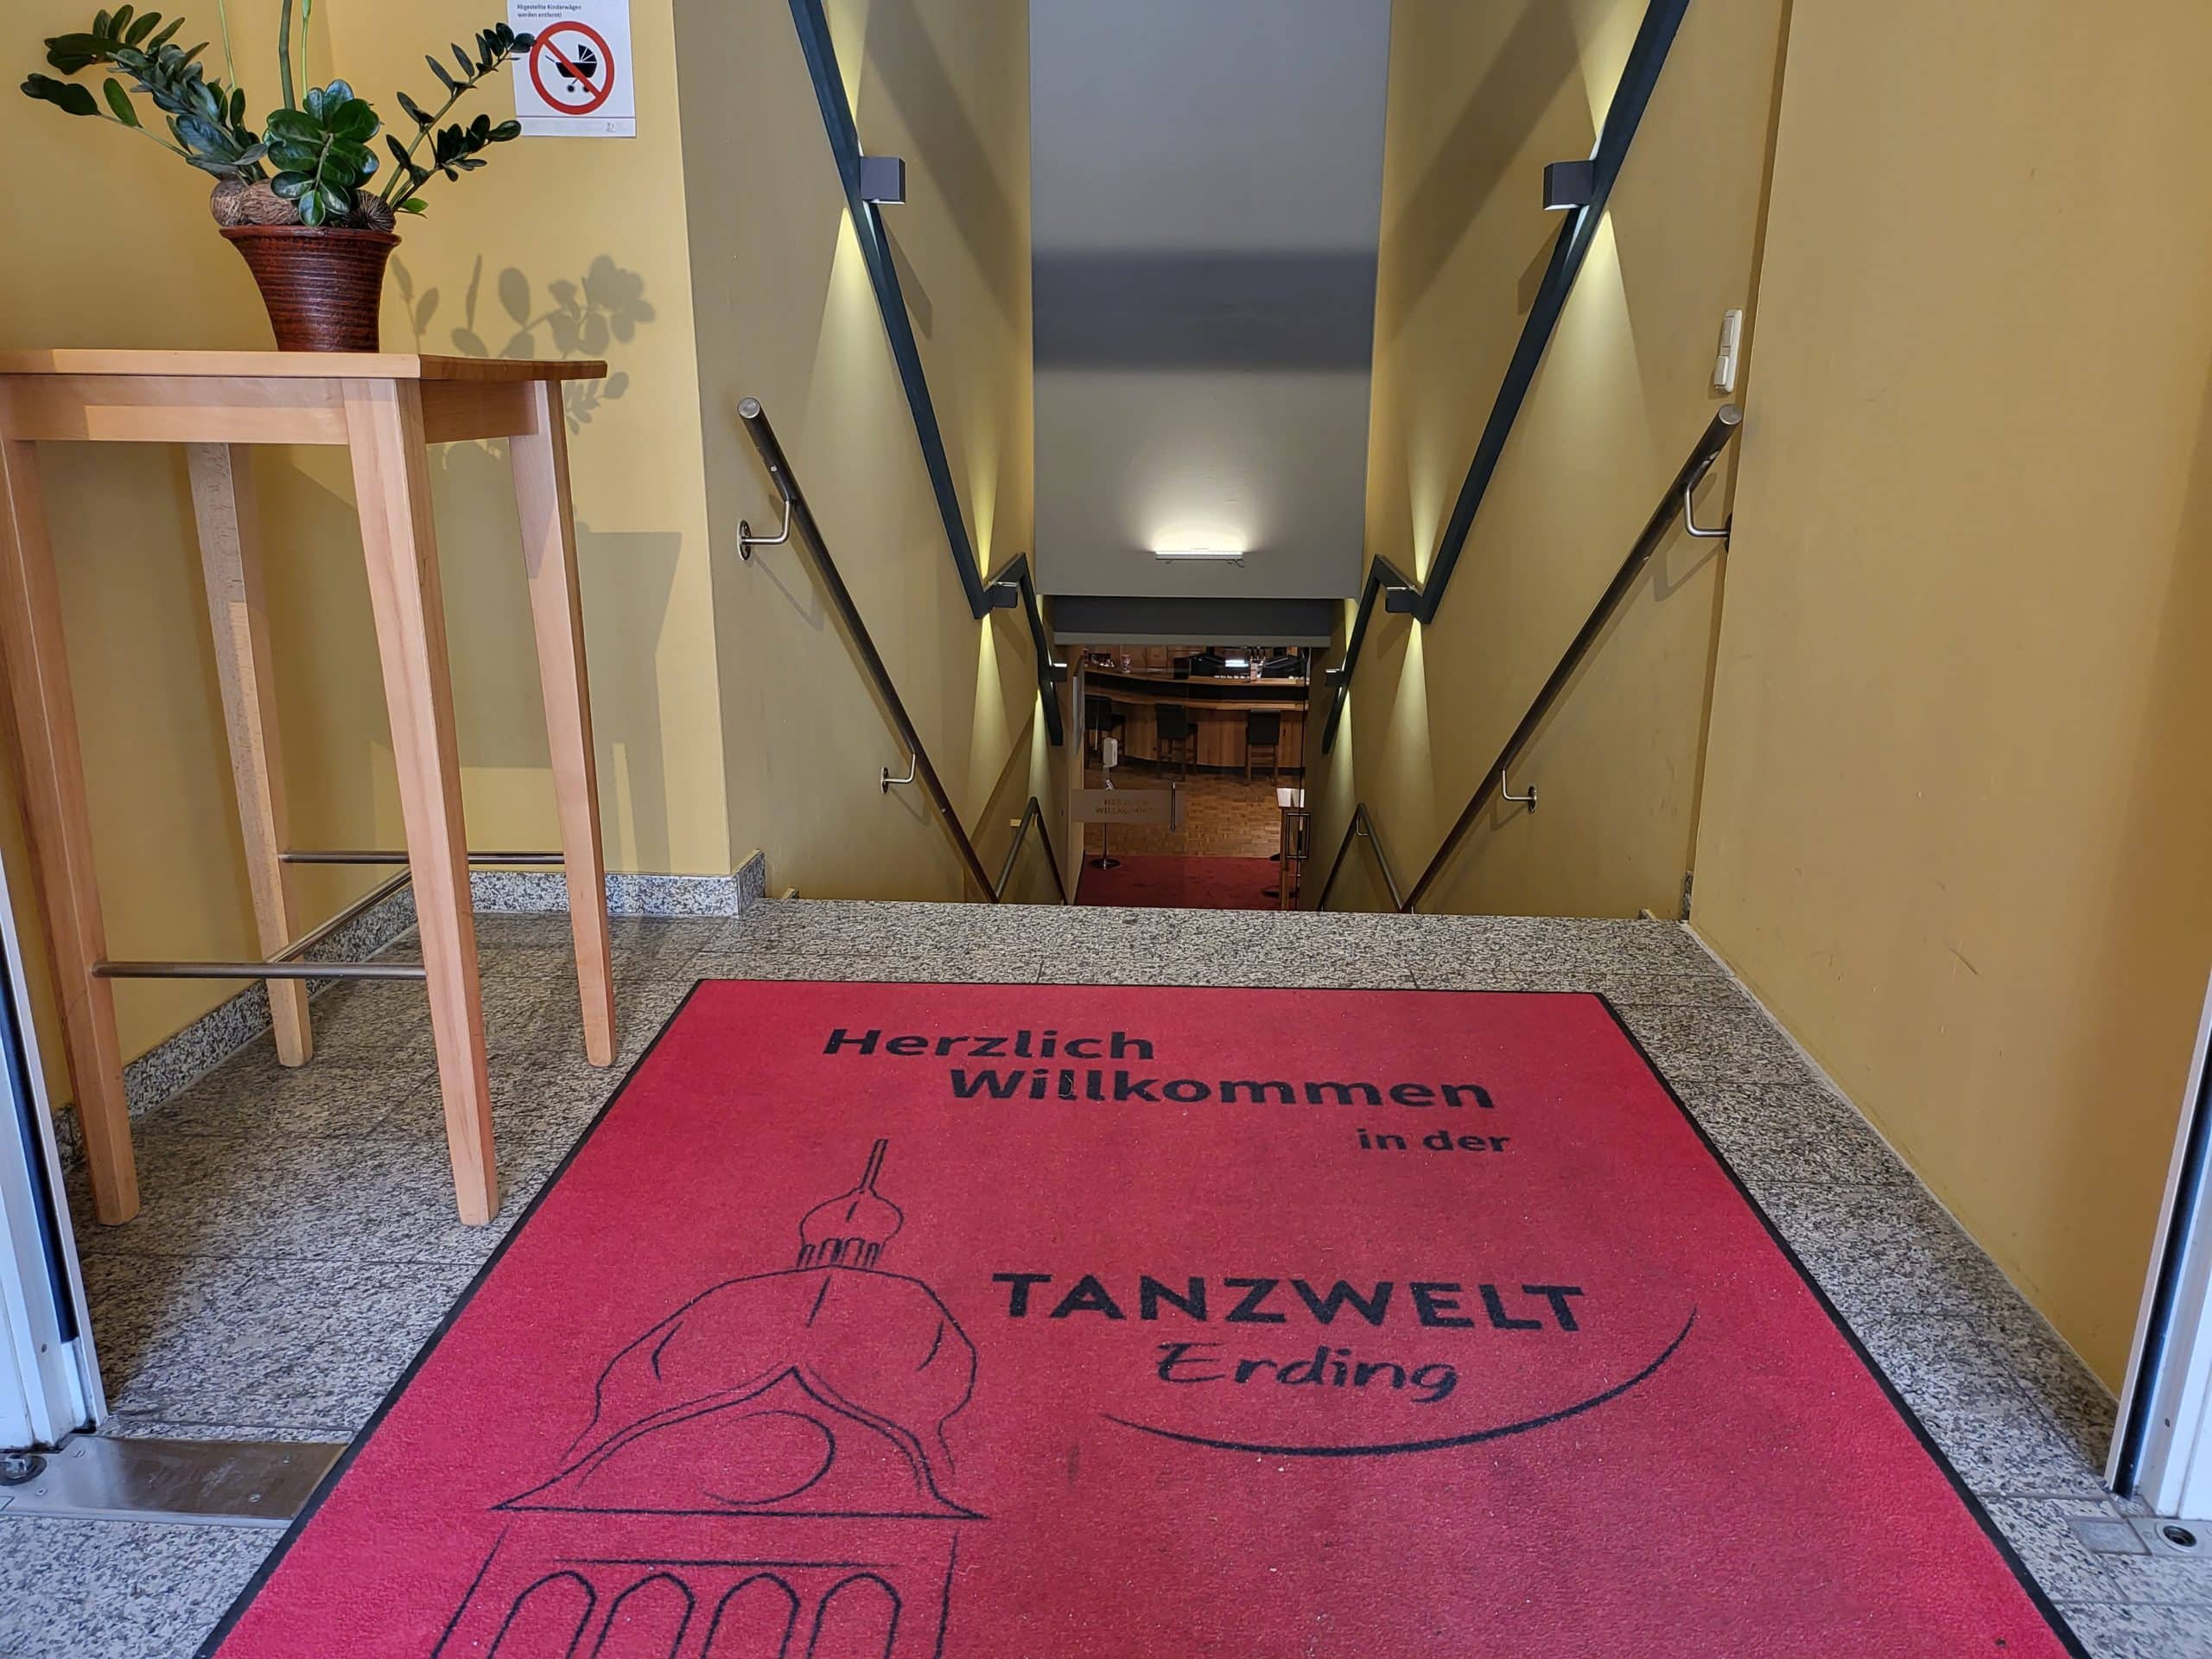 Welcome to Tanzwelt Erding